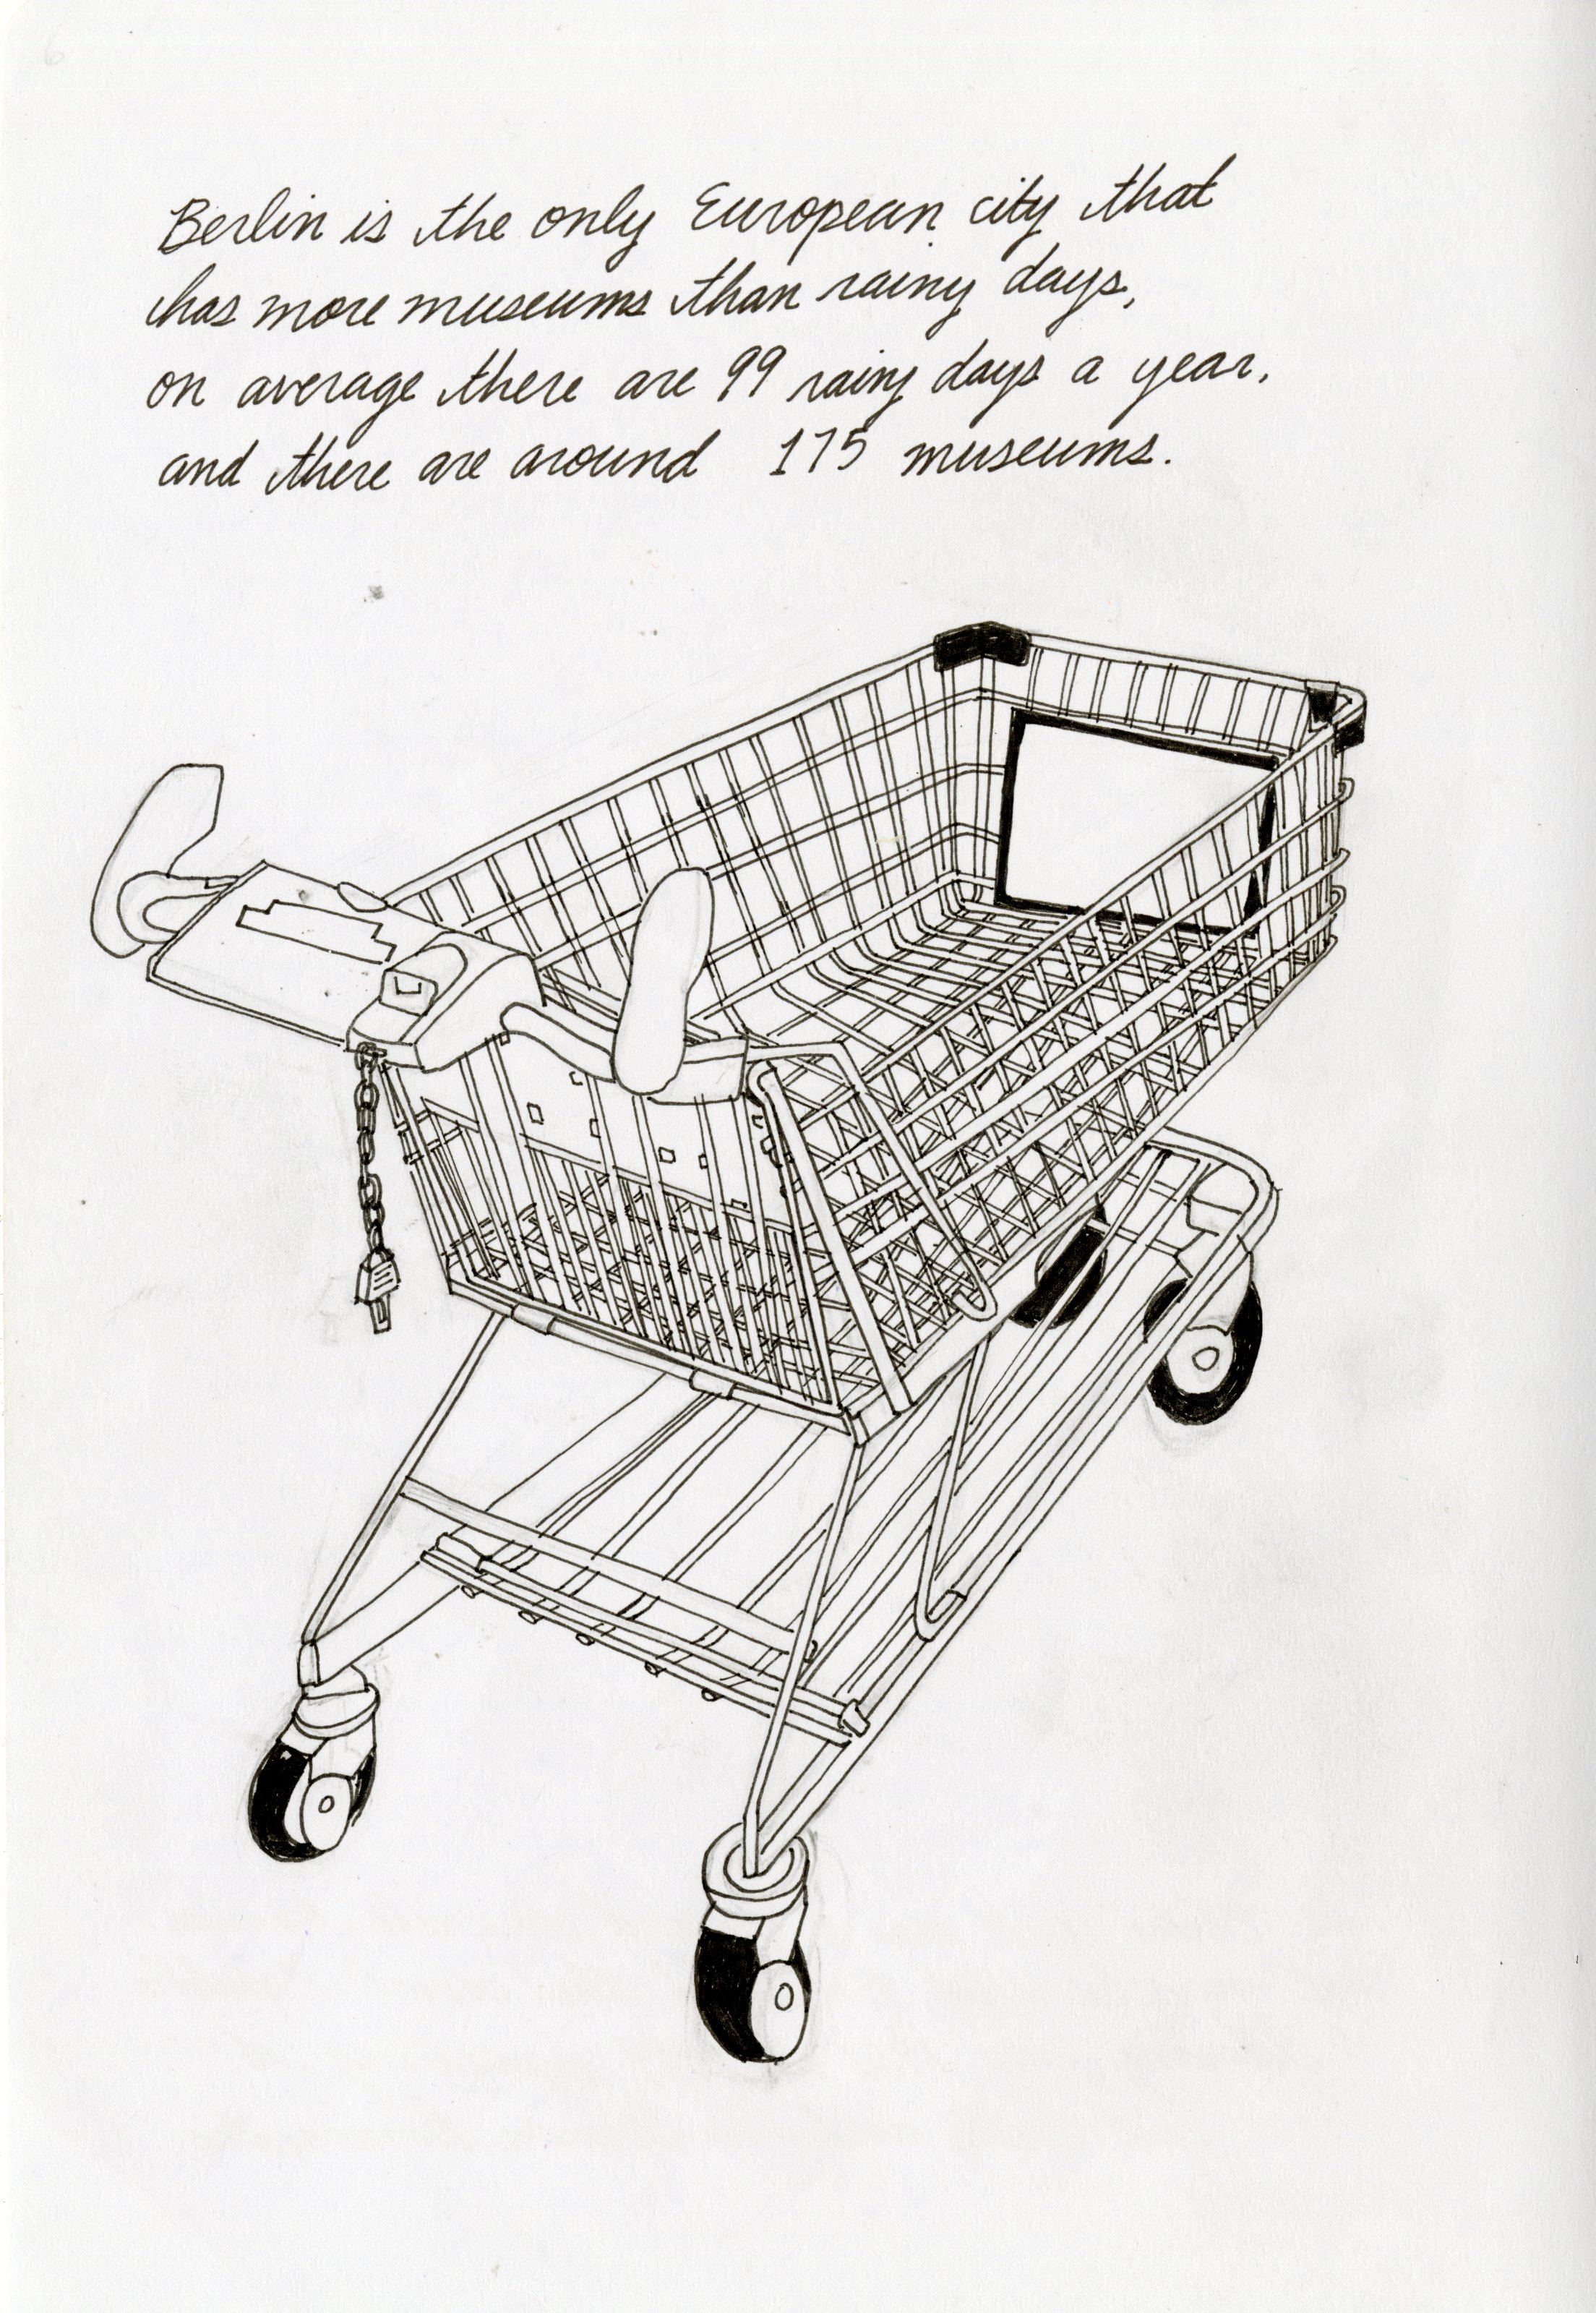 Shopping Cart Illustration